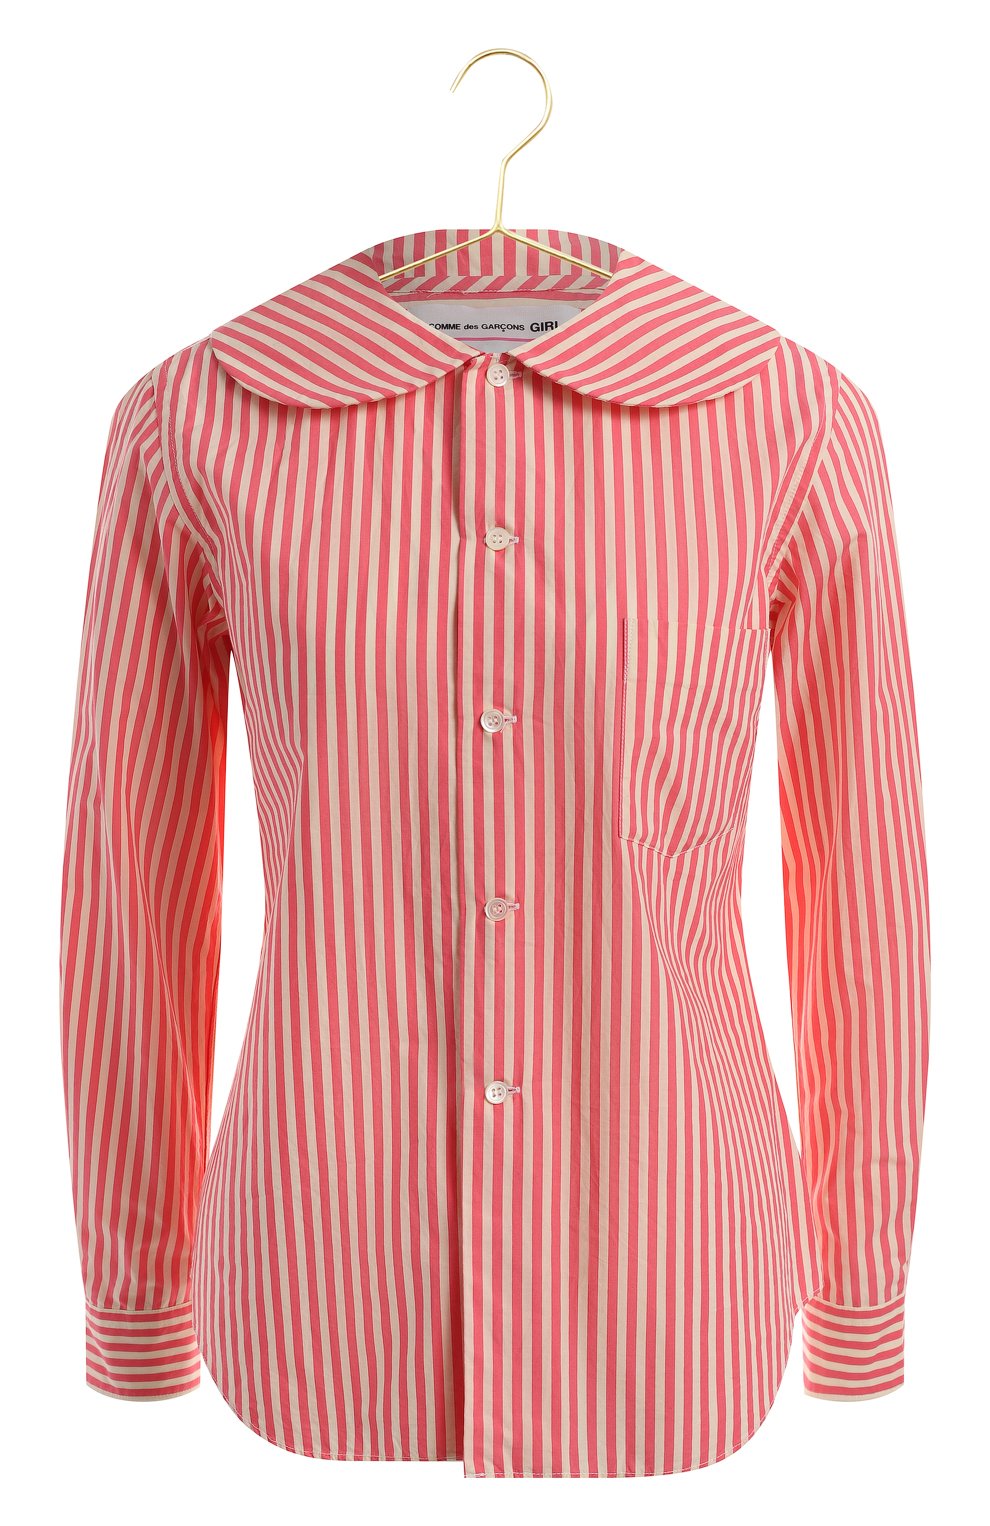 Хлопковая блузка | Comme des Garcons GIRL | Розовый - 1